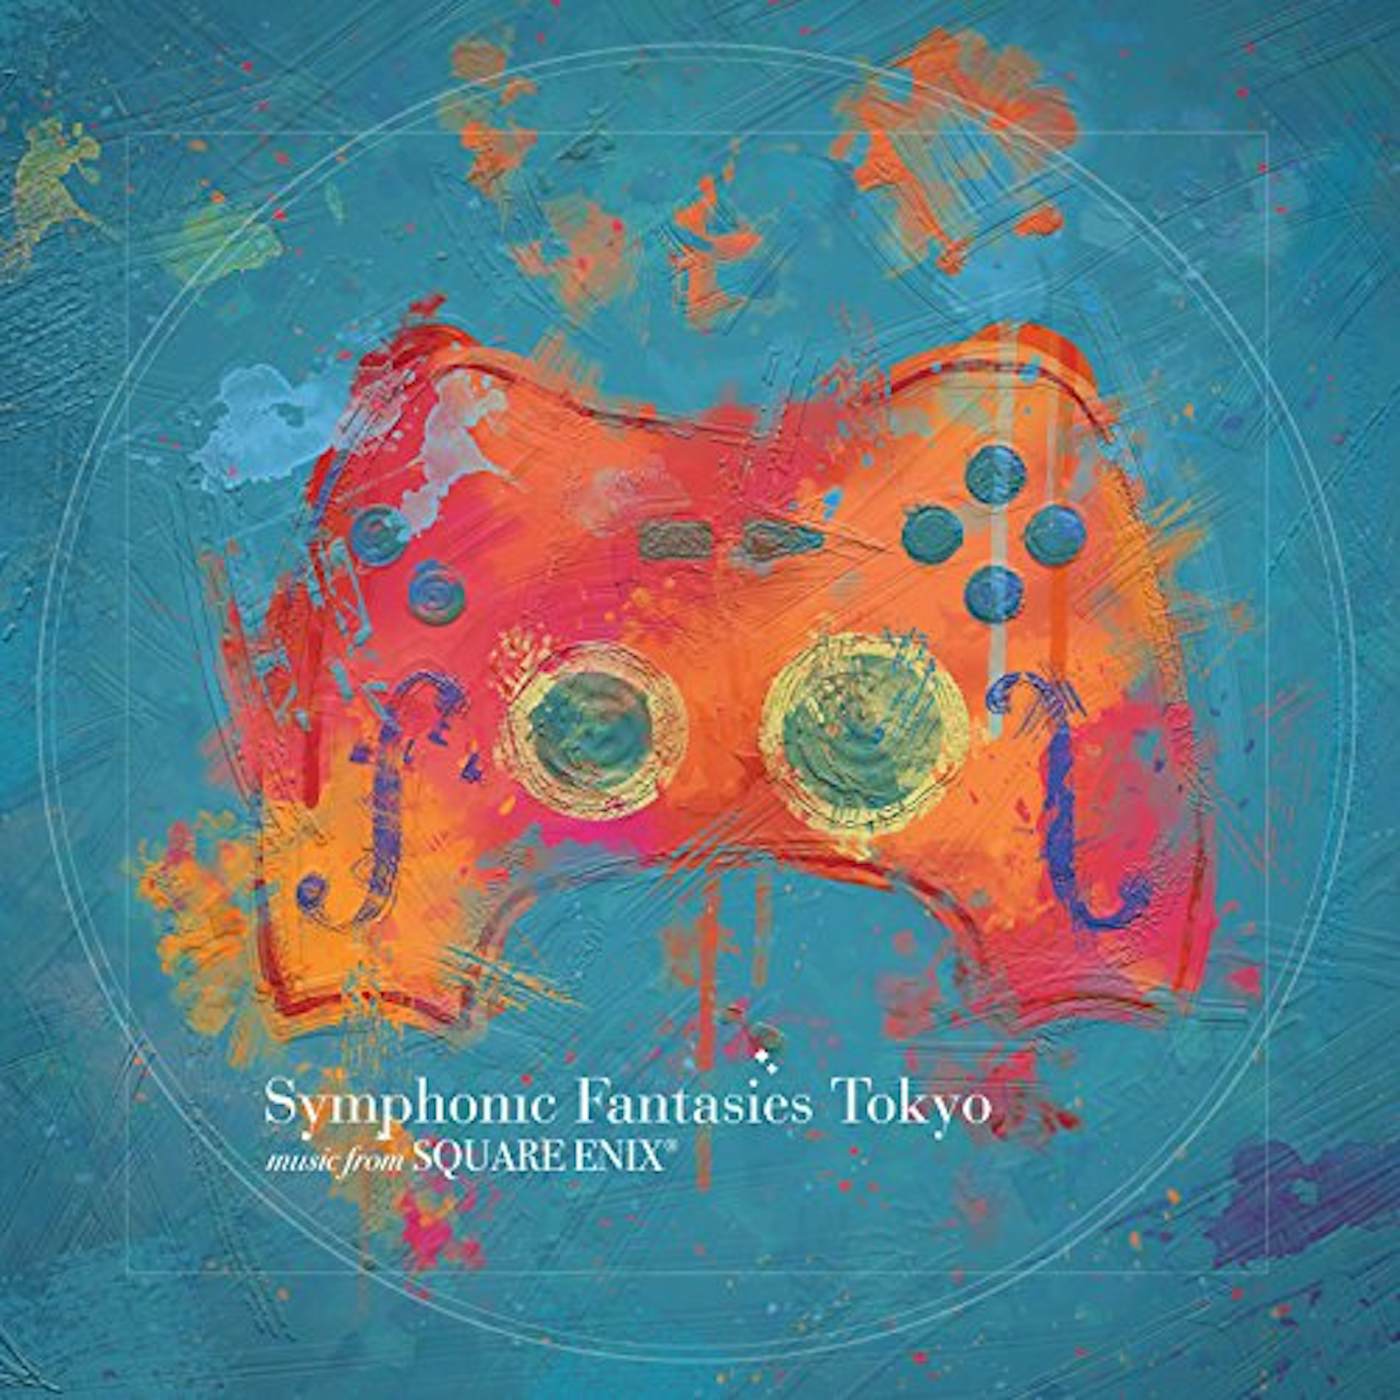 Tokyo Philharmonic Orchestra SYMPHONIC FANTASIES TOKYO CD